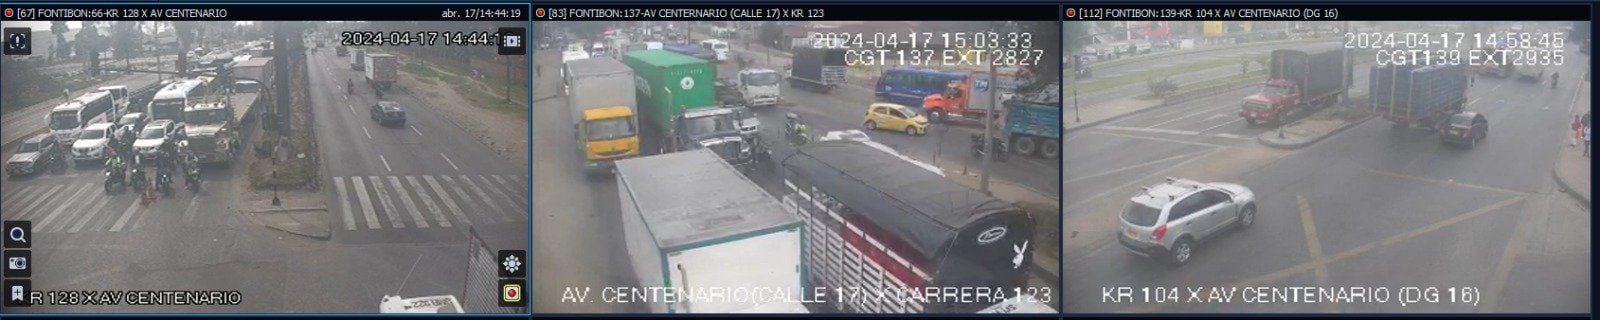 Se presenta flujo vehicular elevado ingresando Bogotá por la Av. Centenario - crédito @BogotaTransito / X